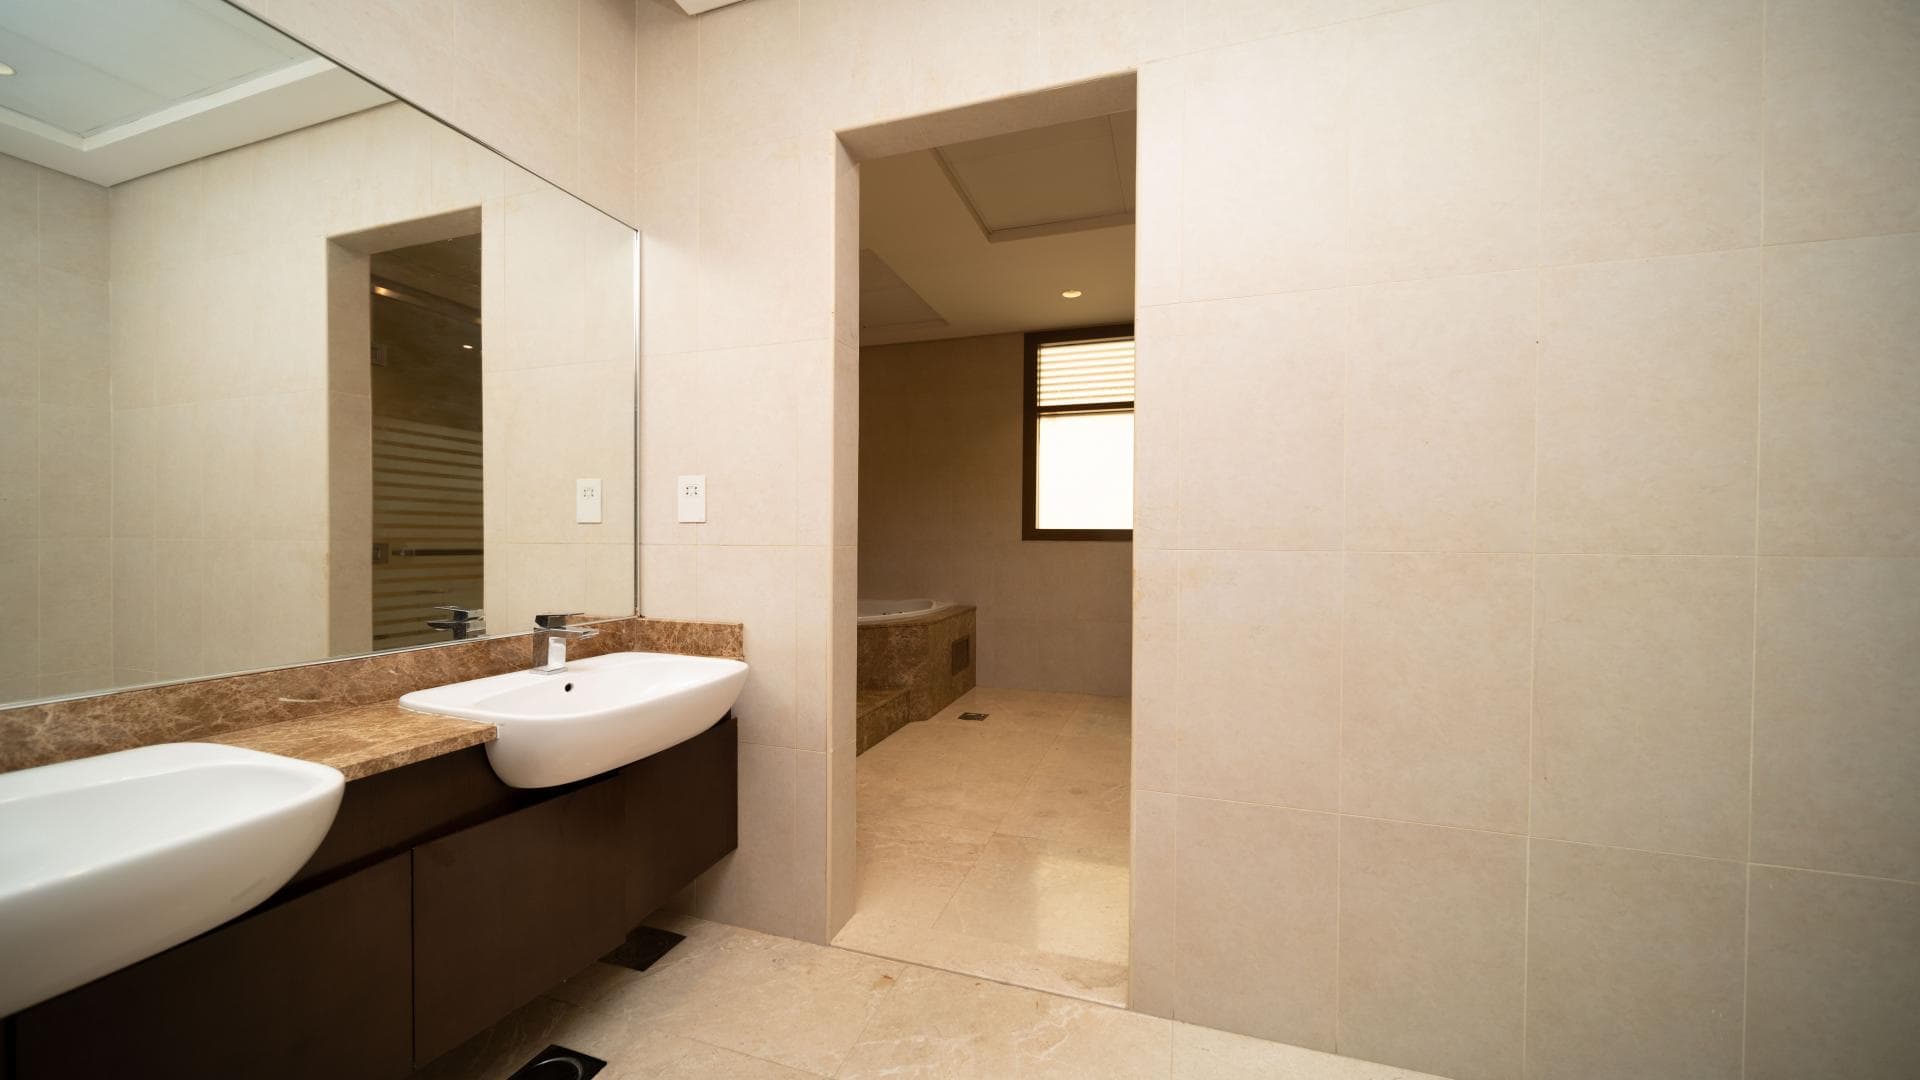 5 Bedroom Villa For Rent Meydan Gated Community Lp13922 2ea53162ba702000.jpg